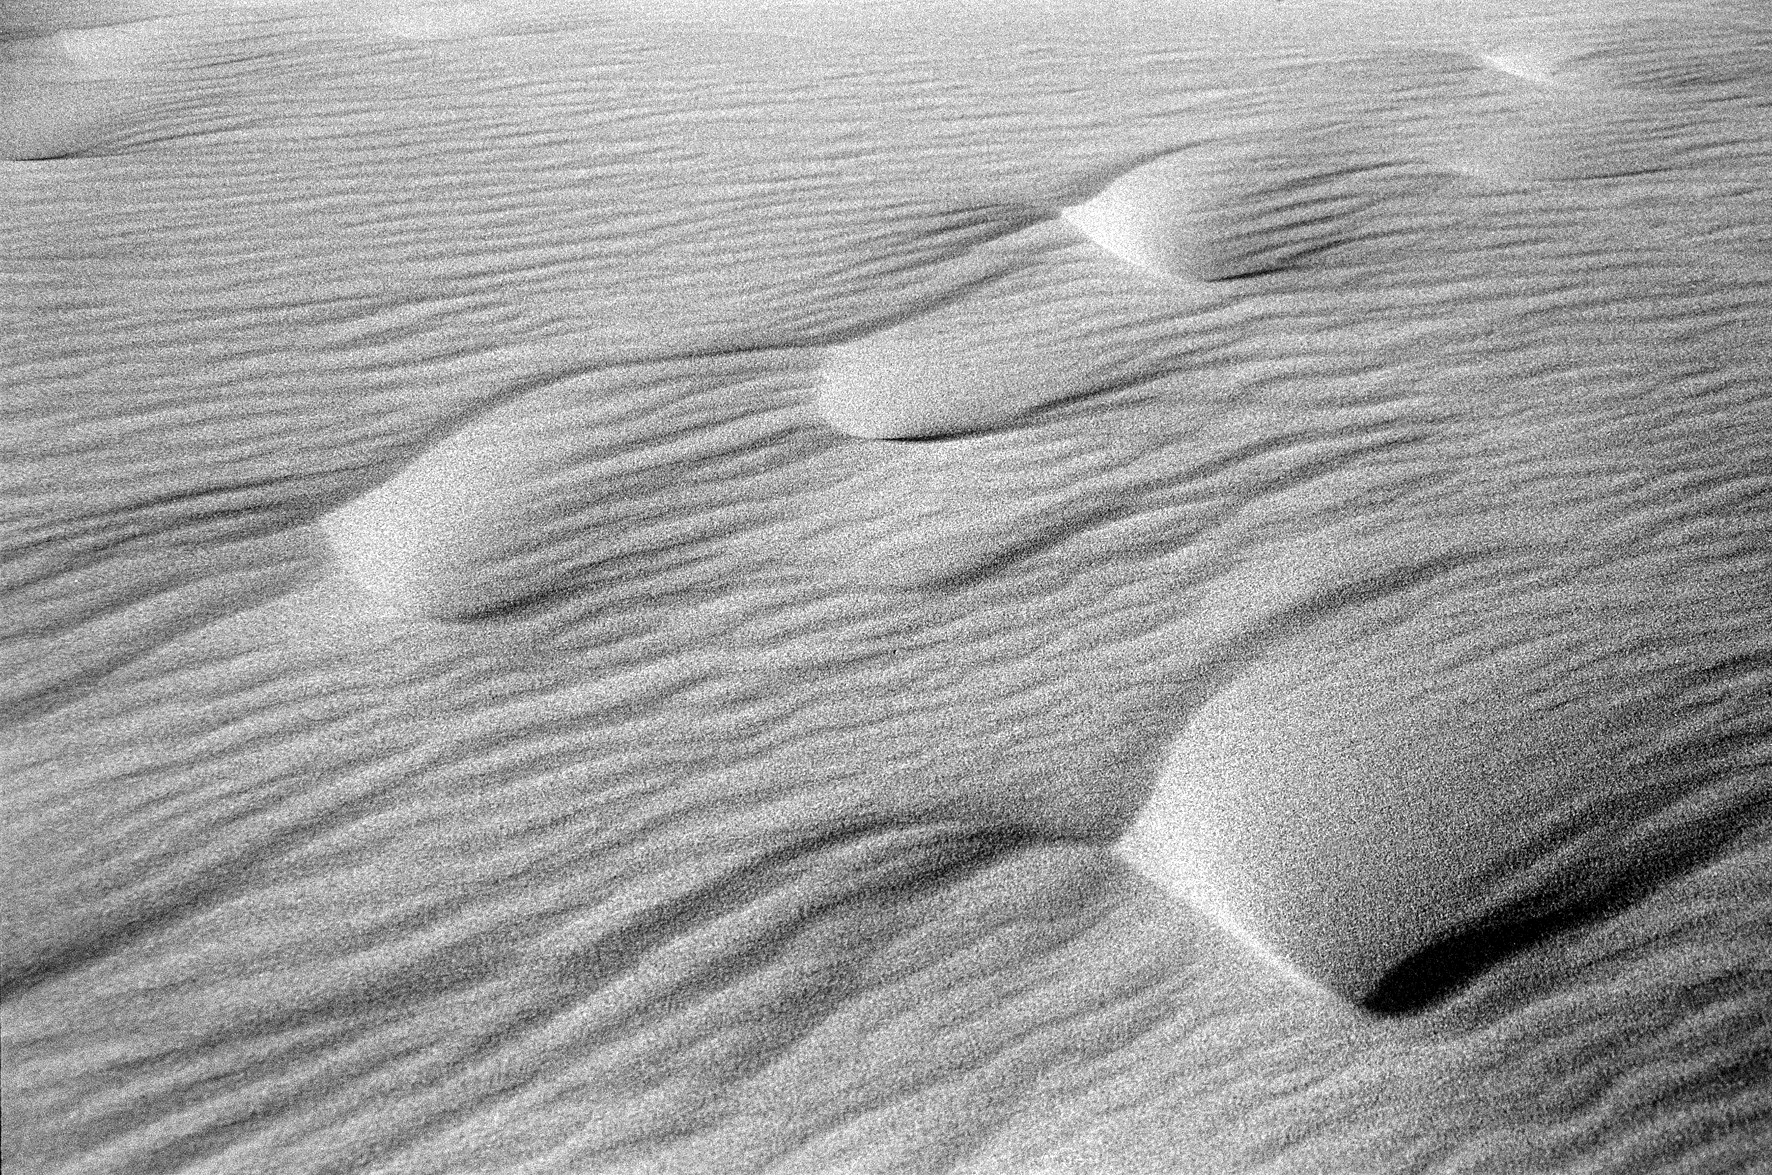 Maranjab Desert7.jpg